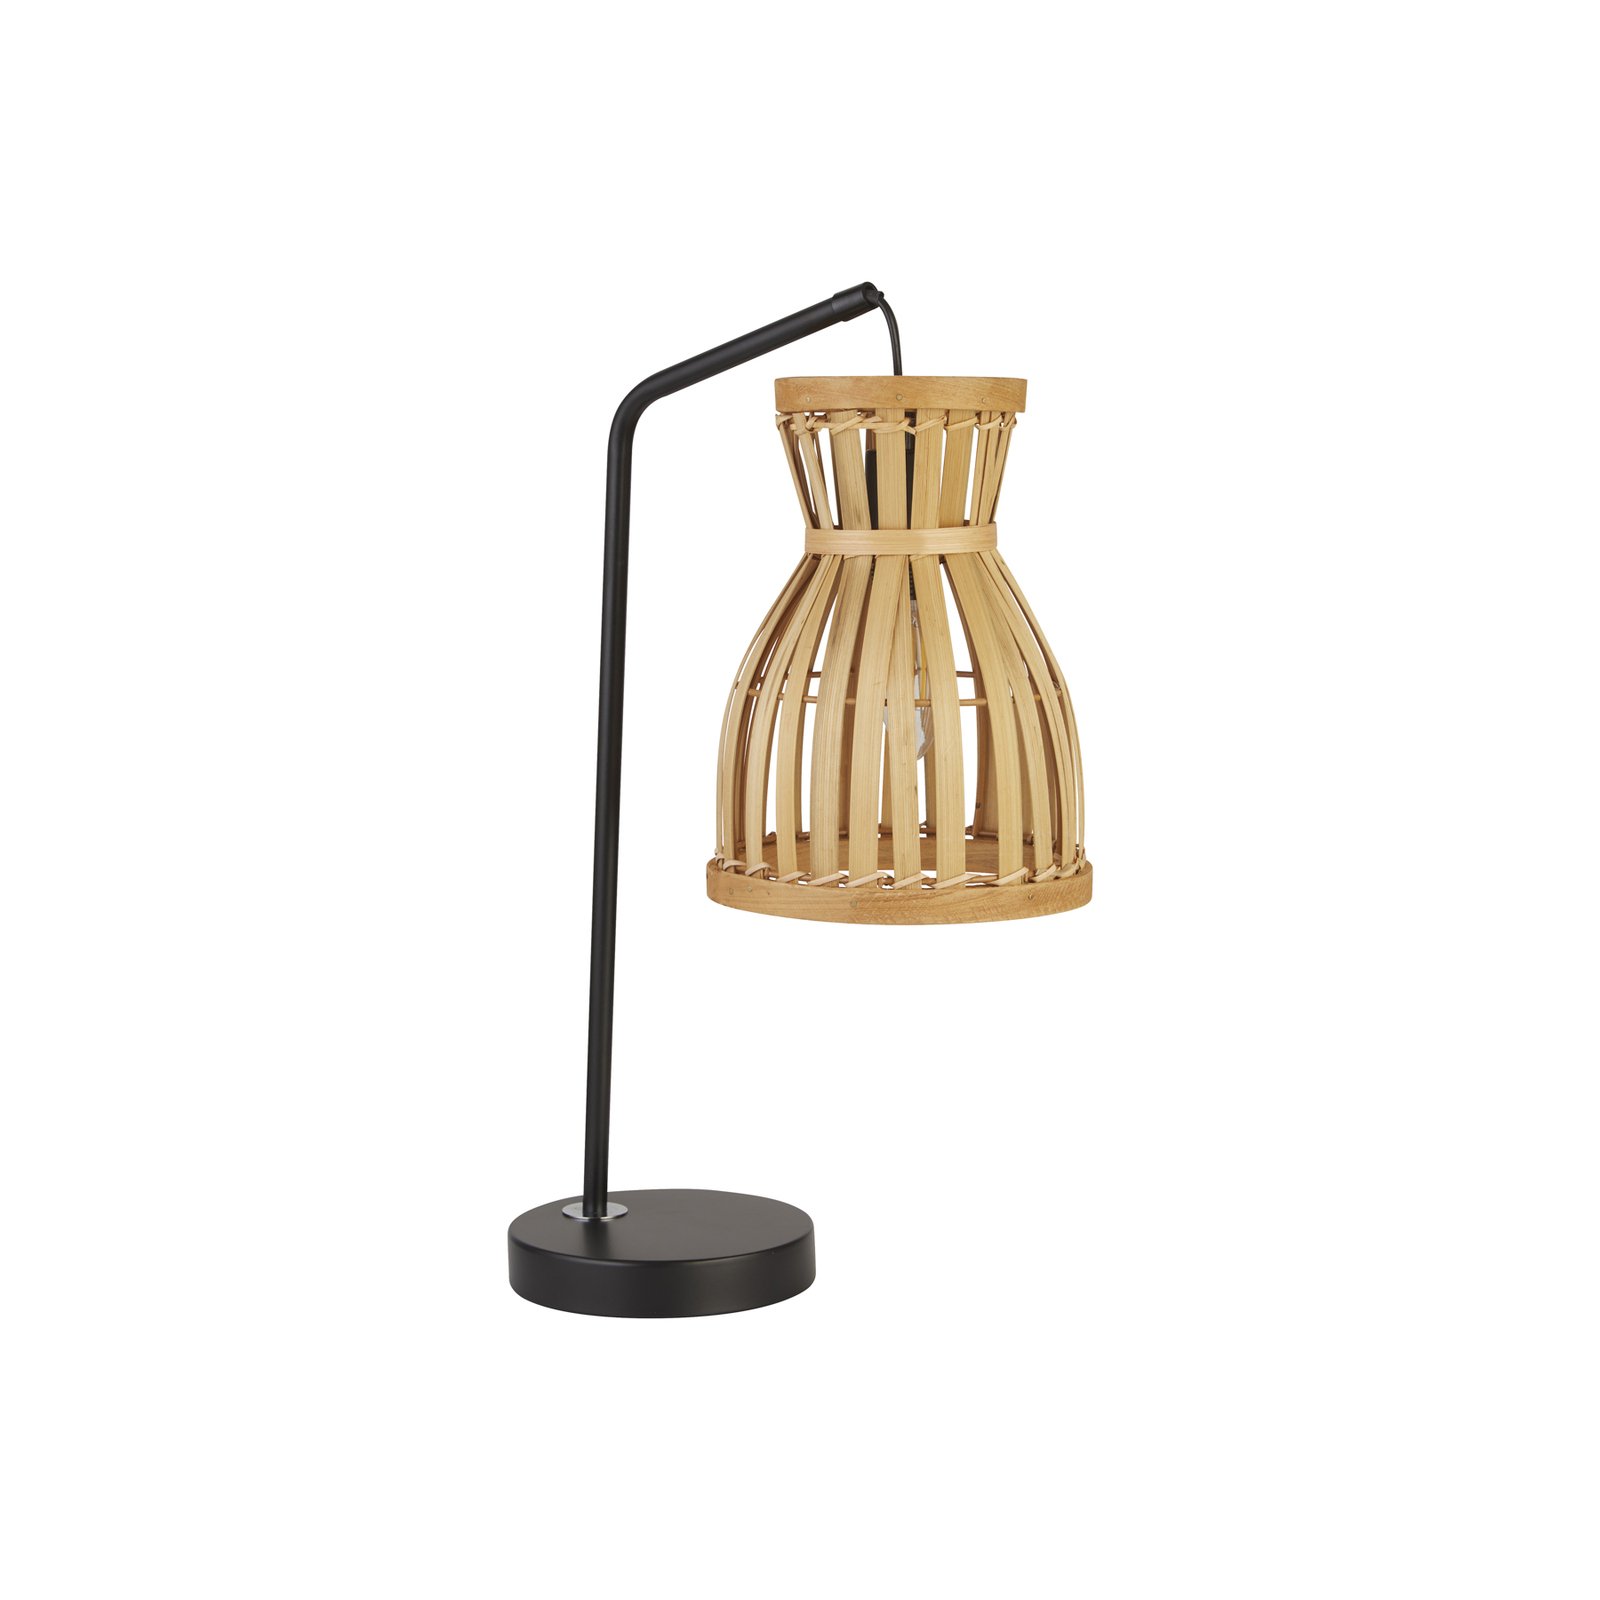 Stolová lampa X Malaga, bambus